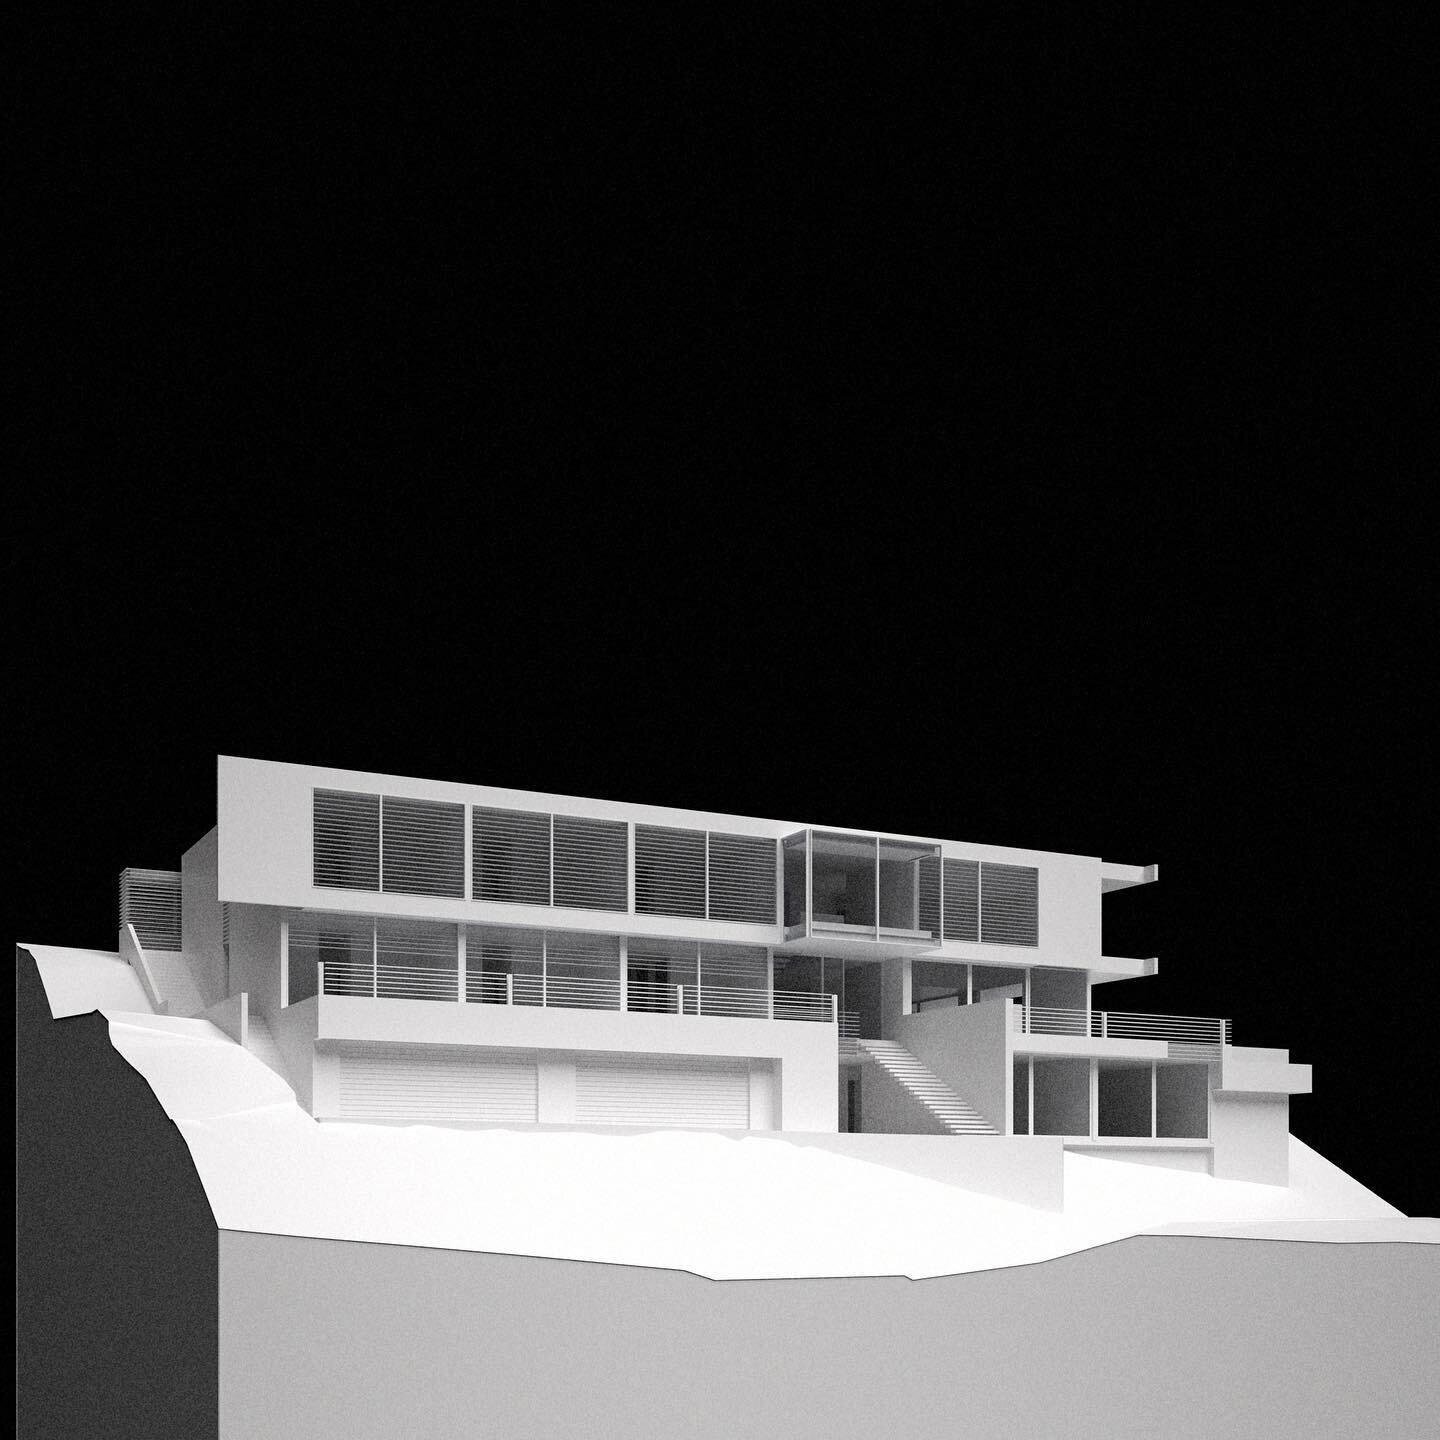 ⁣
new model Pix⁣
⁣
#architecturalmodels⁣
#modernism⁣
##modernarchitecture⁣
#houses⁣
#hawaii⁣
#archilovers⁣
#hawaiianmodern